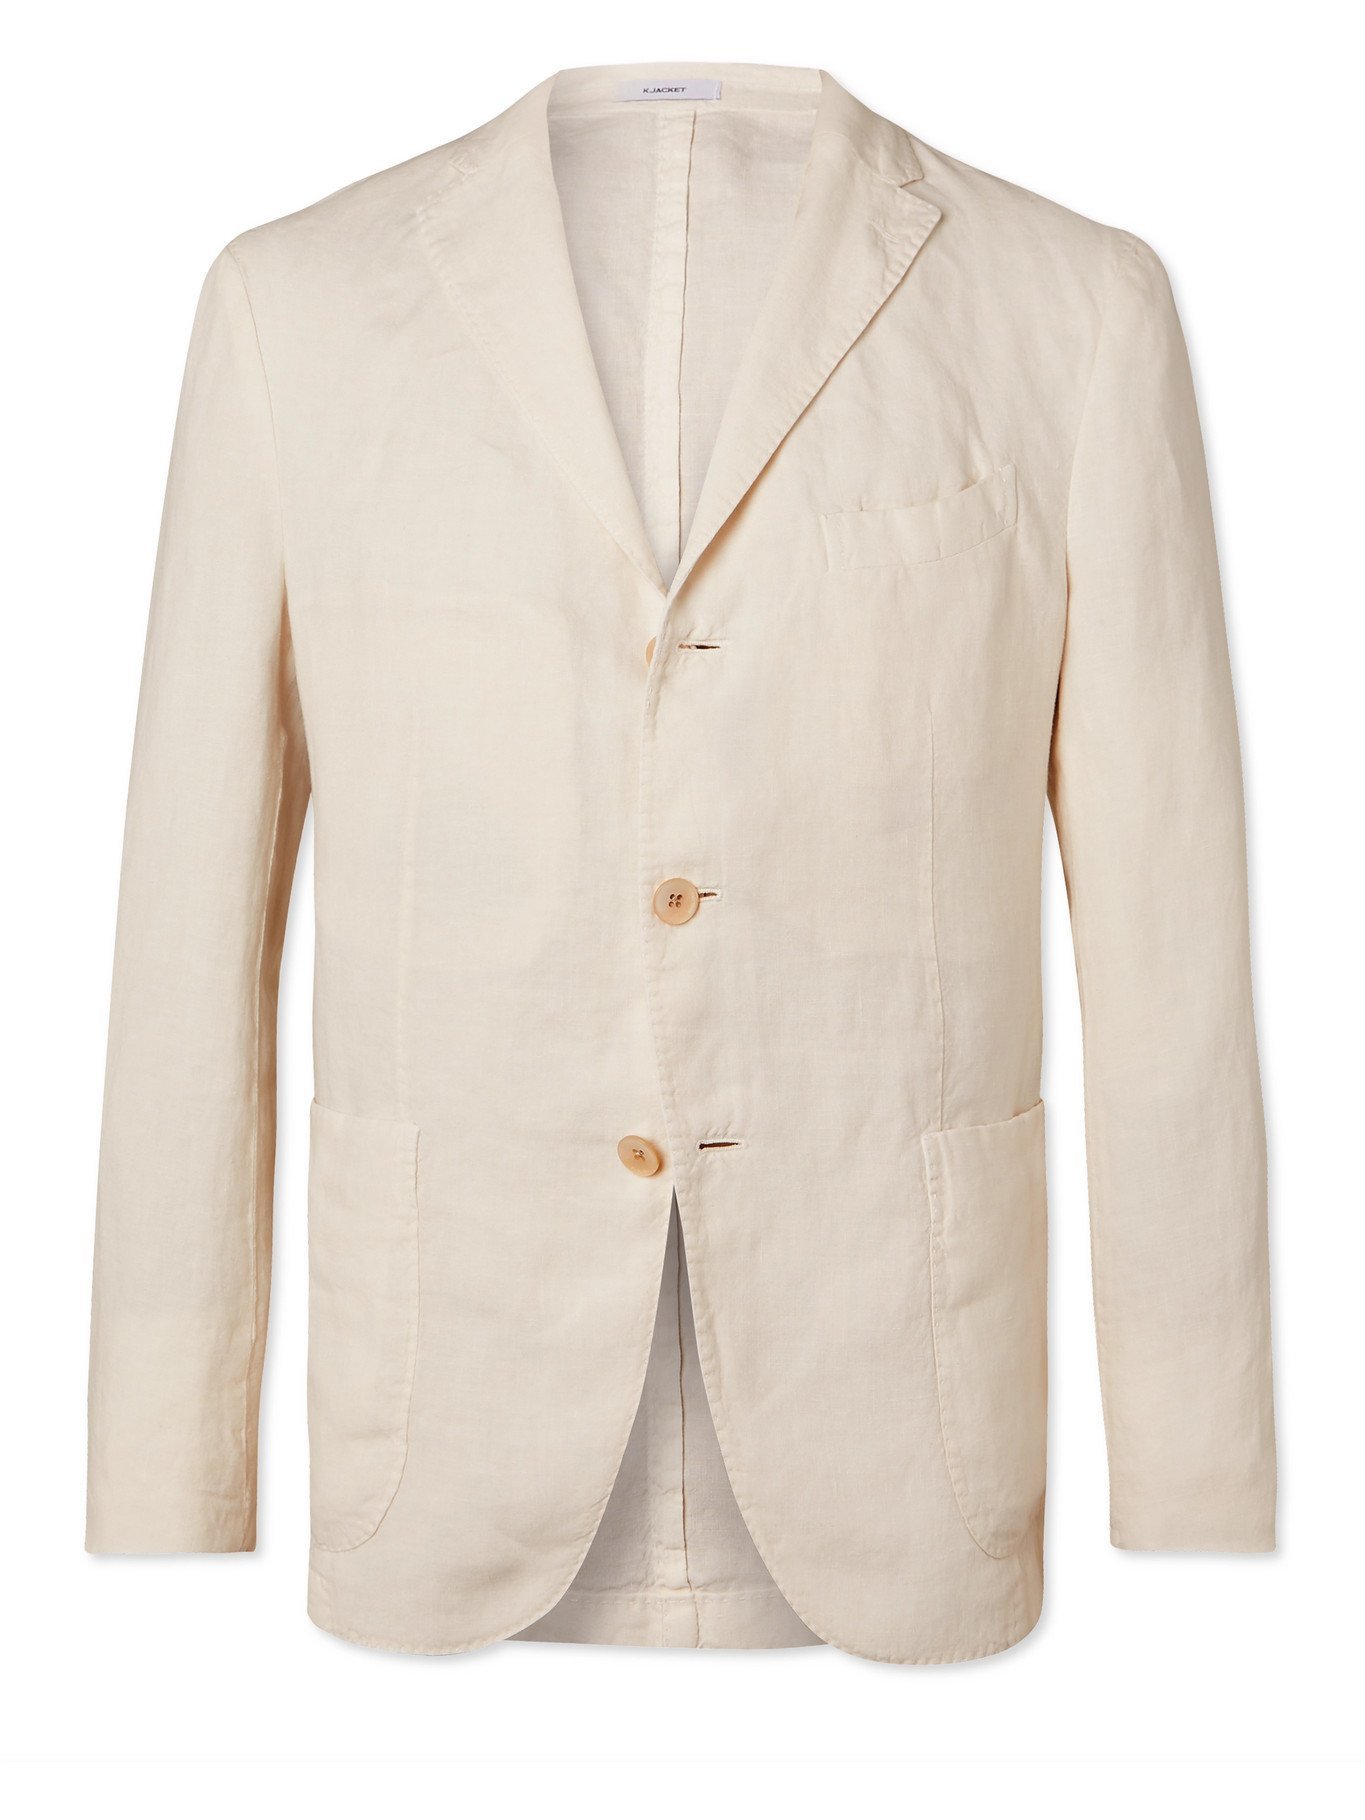 BOGLIOLI - Linen Suit Jacket - White Boglioli